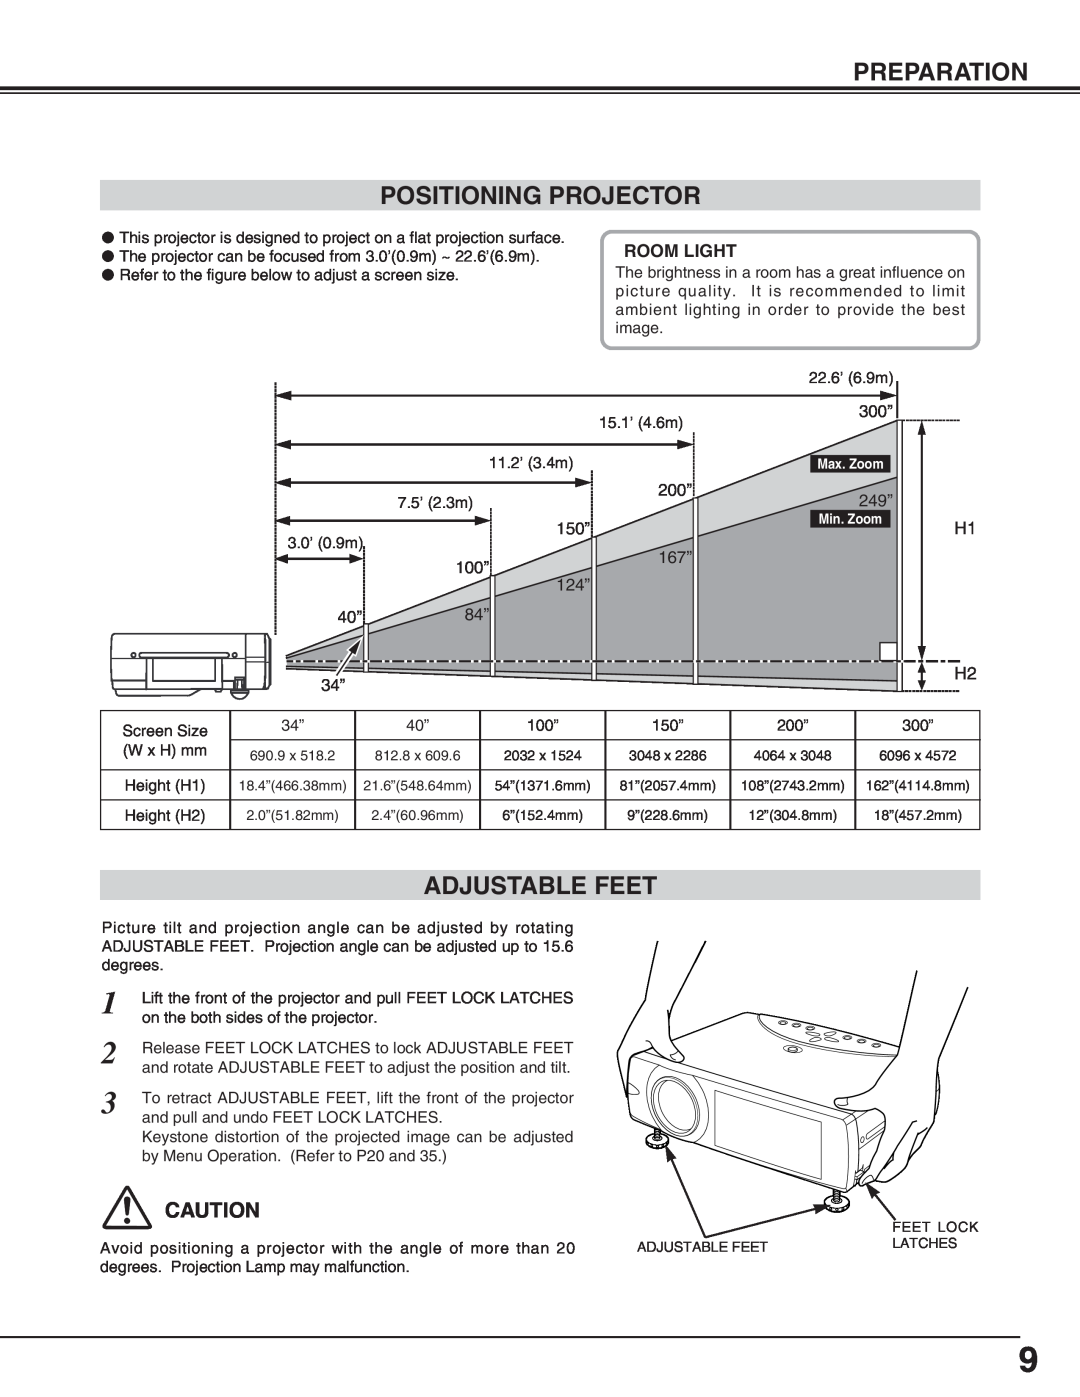 BOXLIGHT cp-16t manual Preparation Positioning Projector, Adjustable Feet, Room Light 